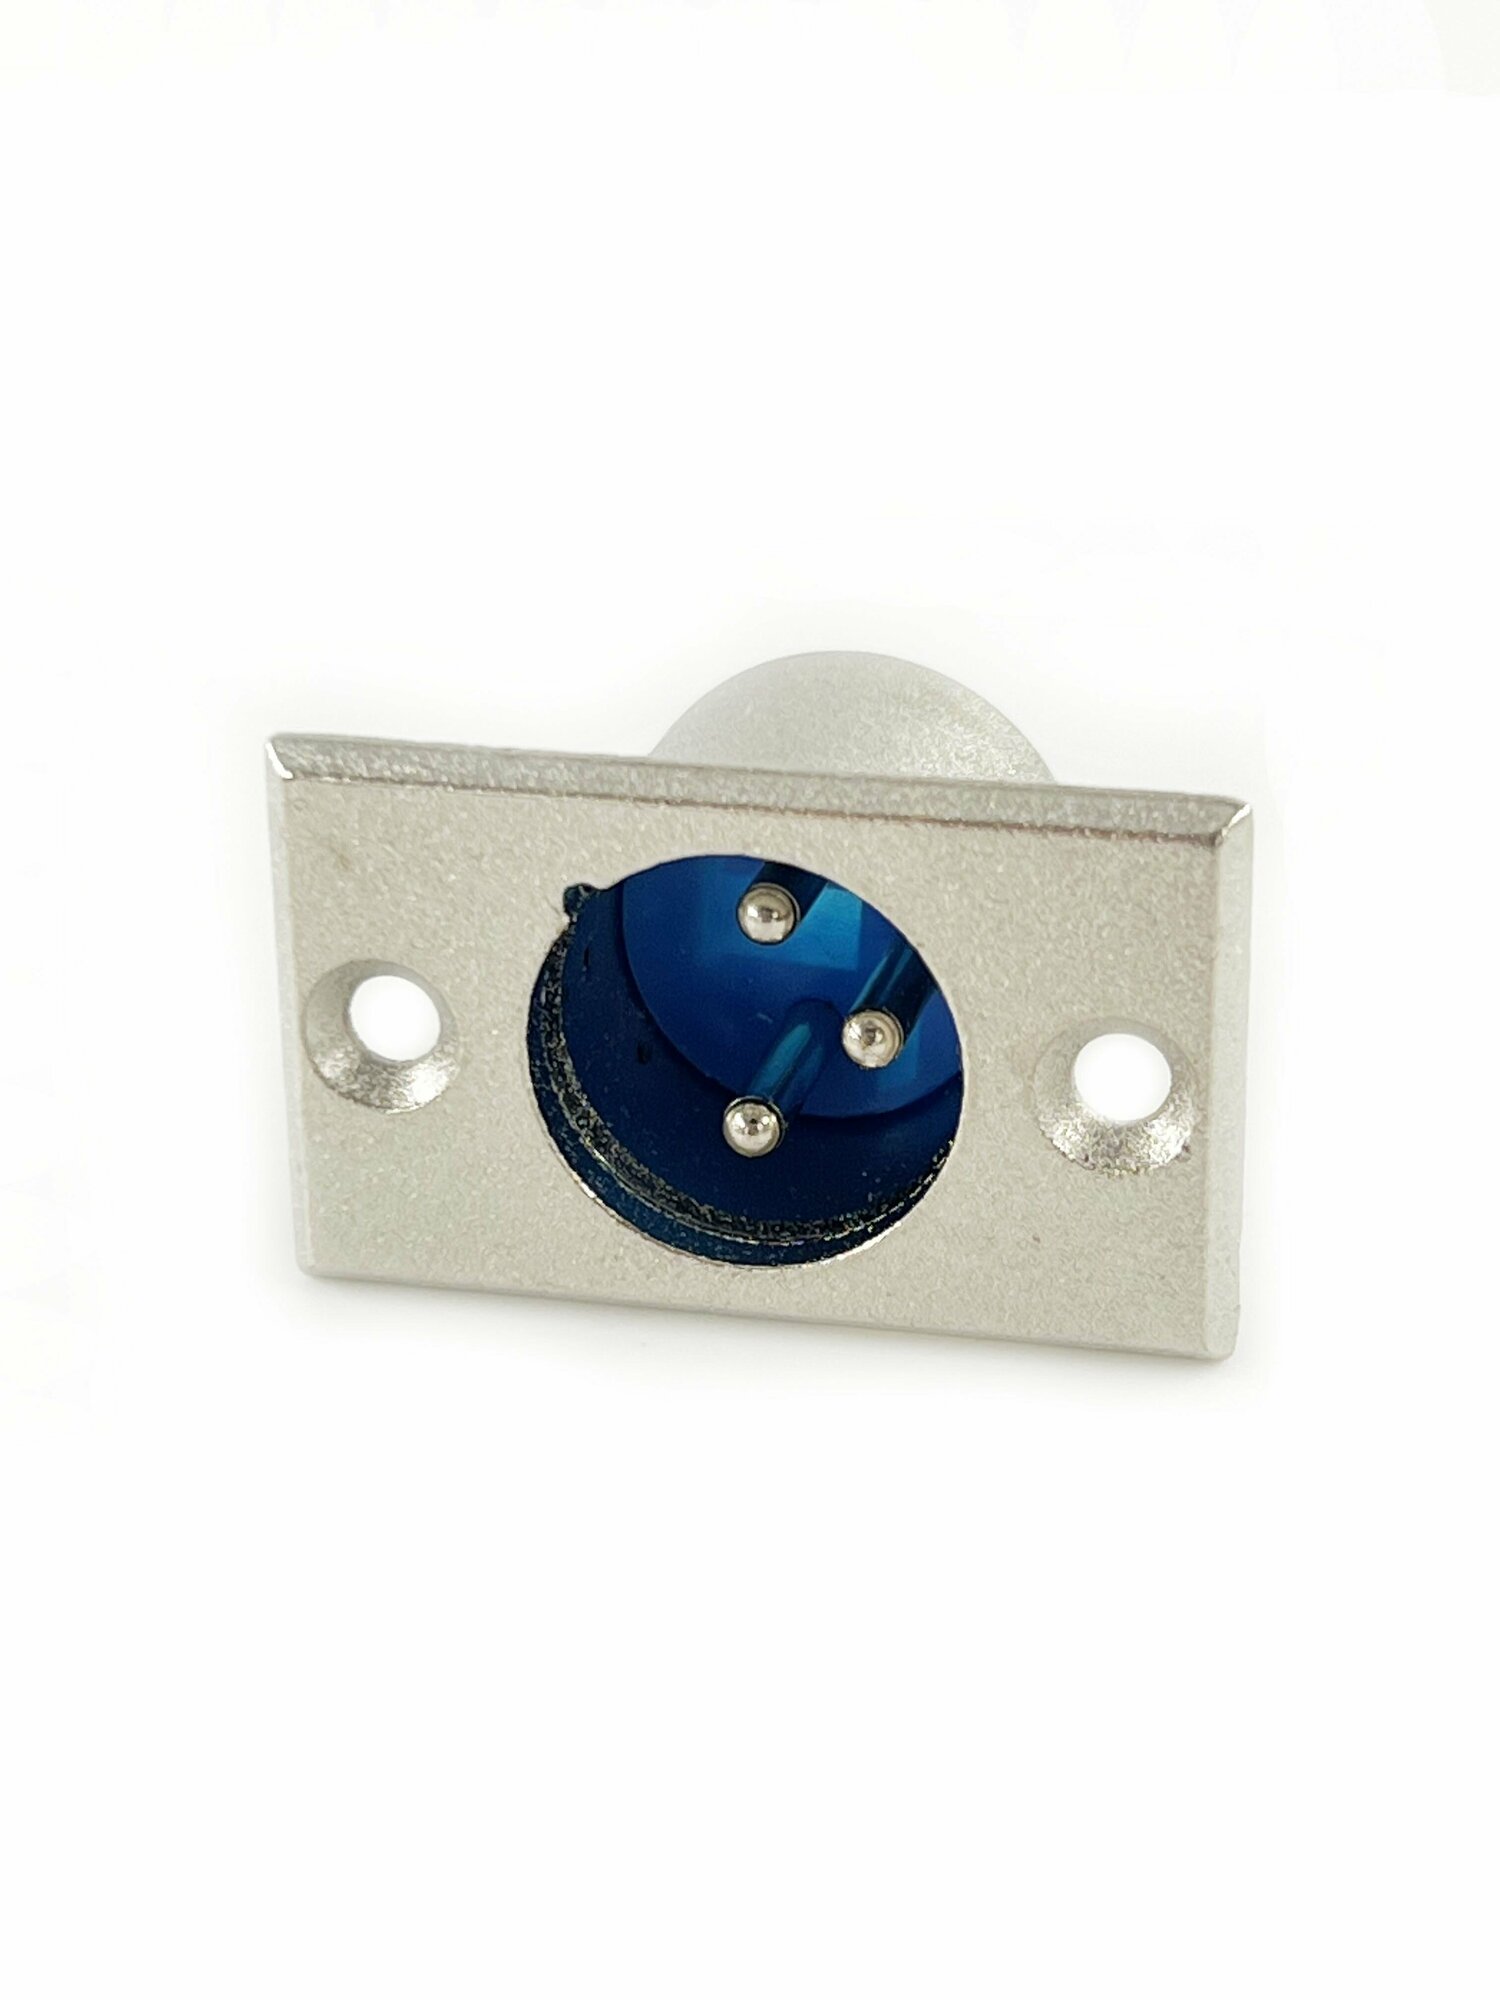 Разъем XLR 3 Pin штекер металл на корпус( 1 штука)